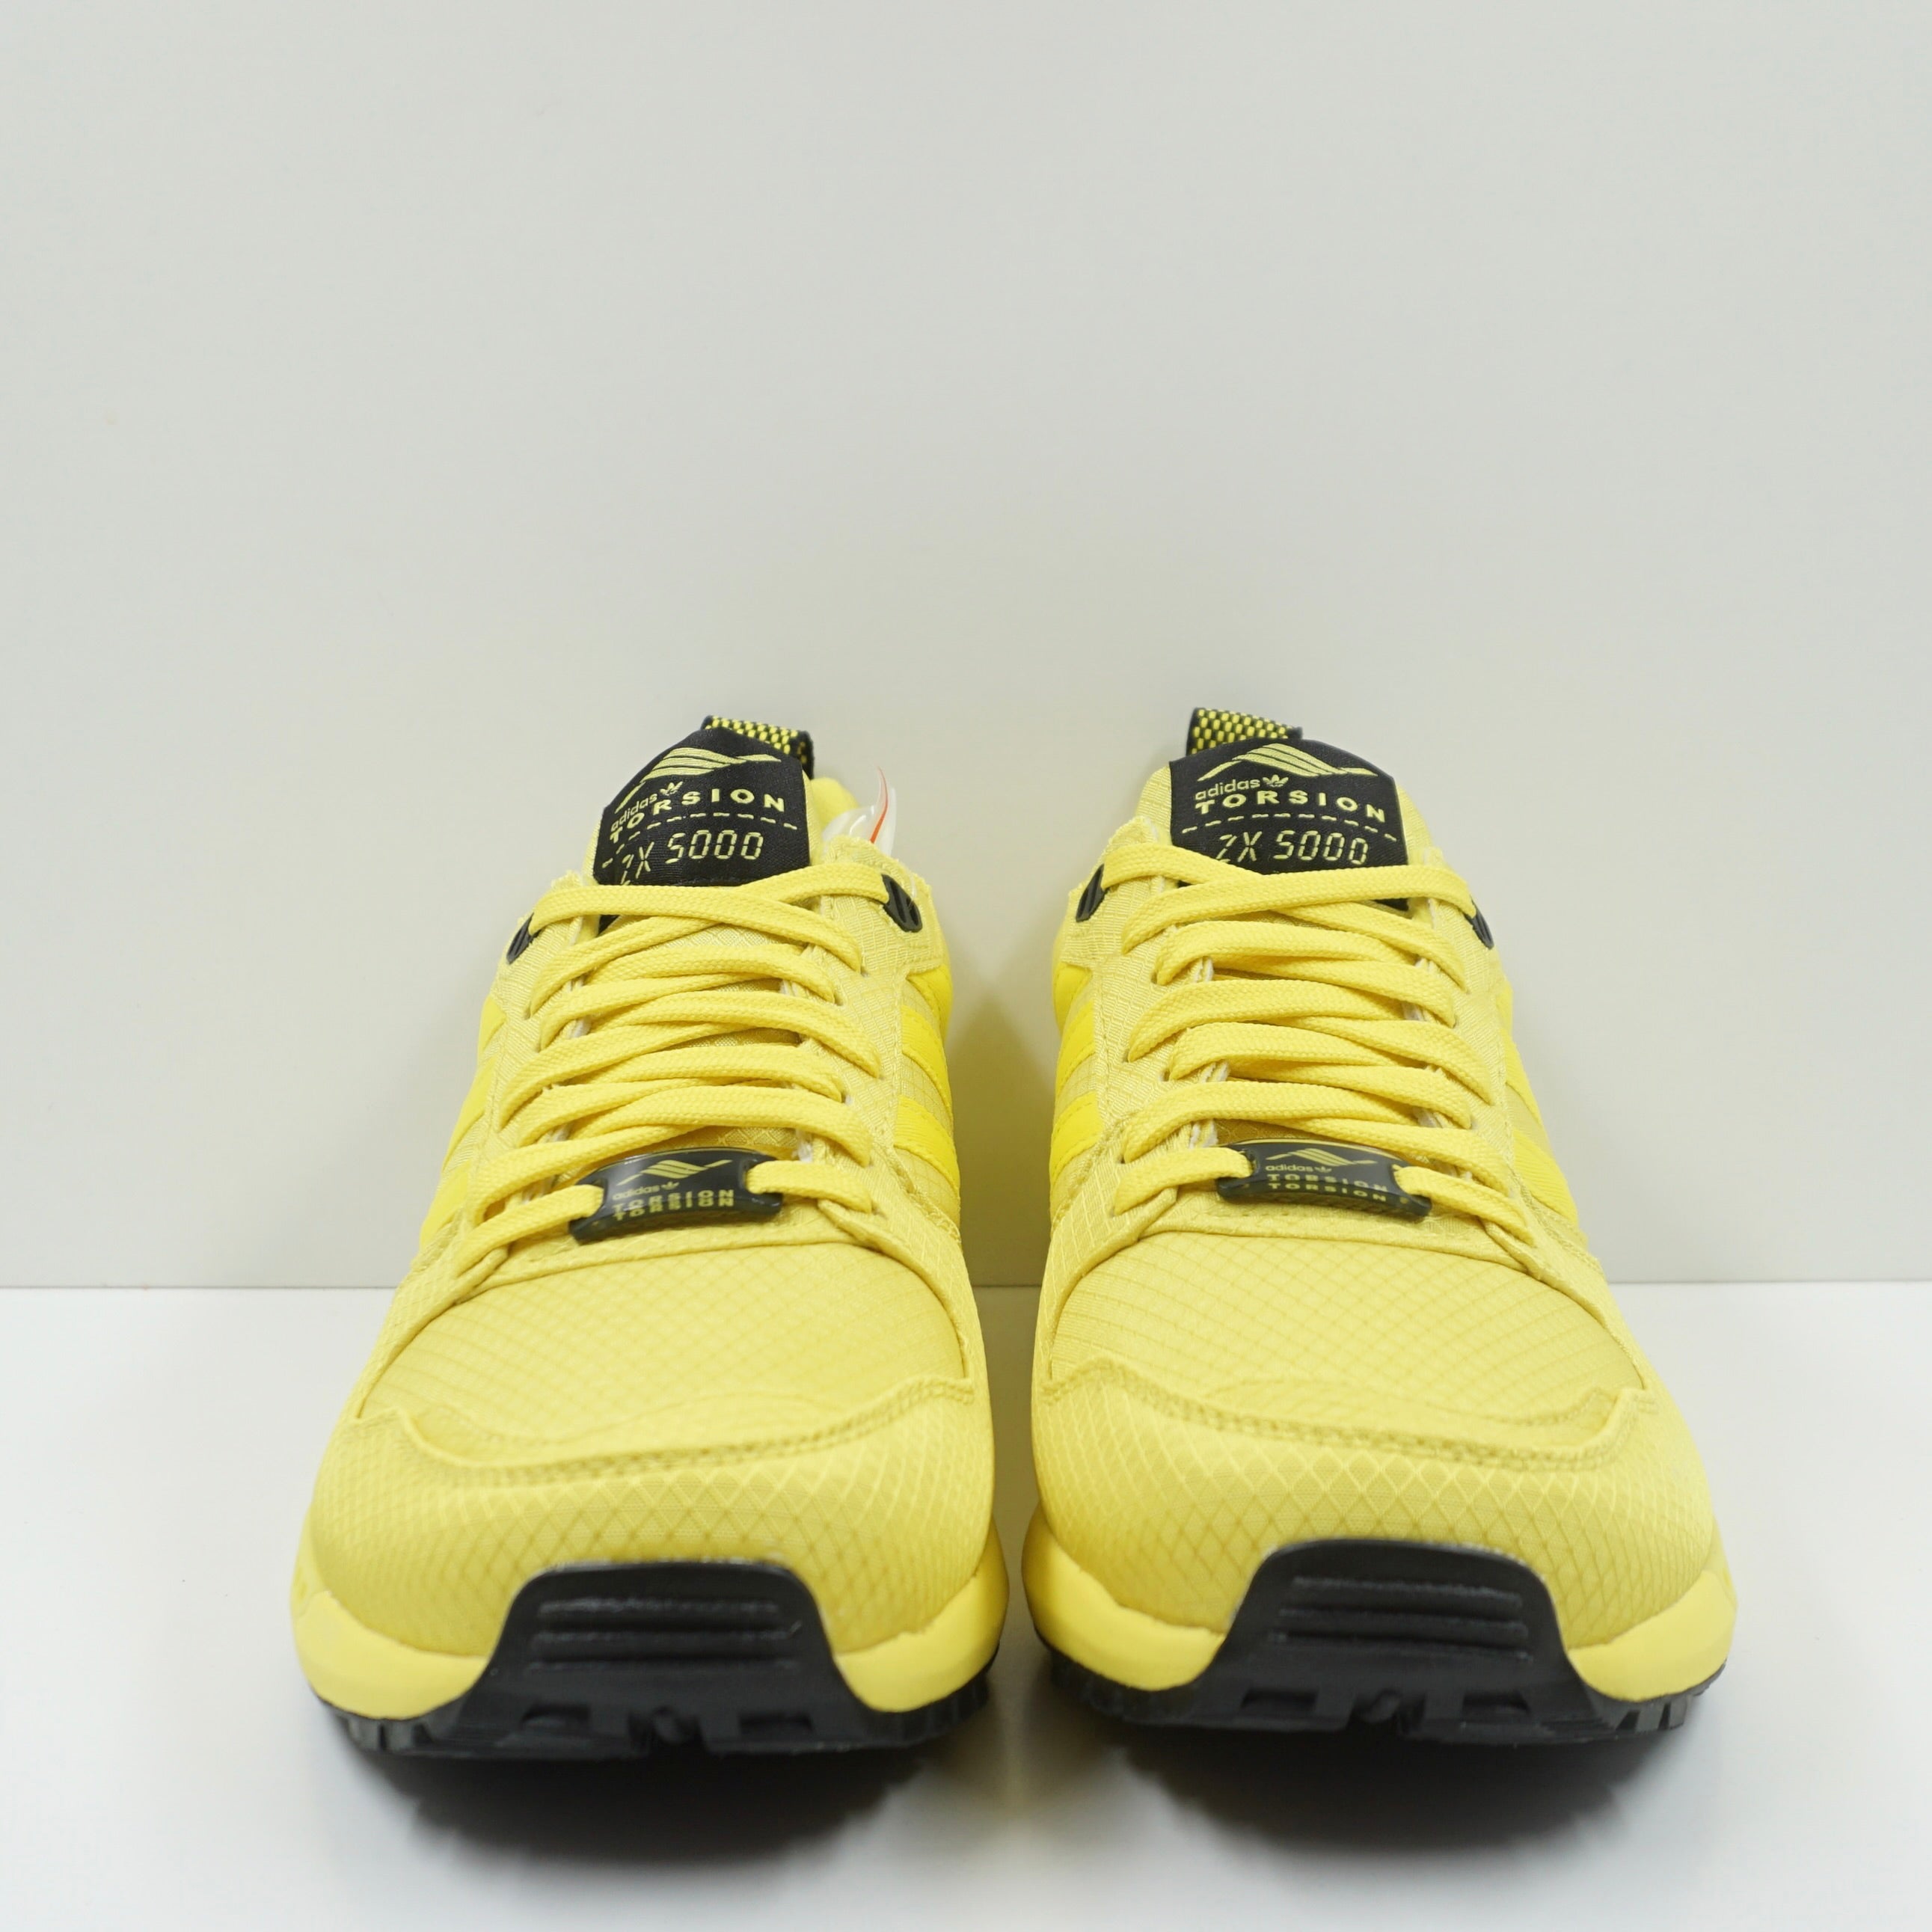 Adidas ZX 5000 Torsion Bright Yellow